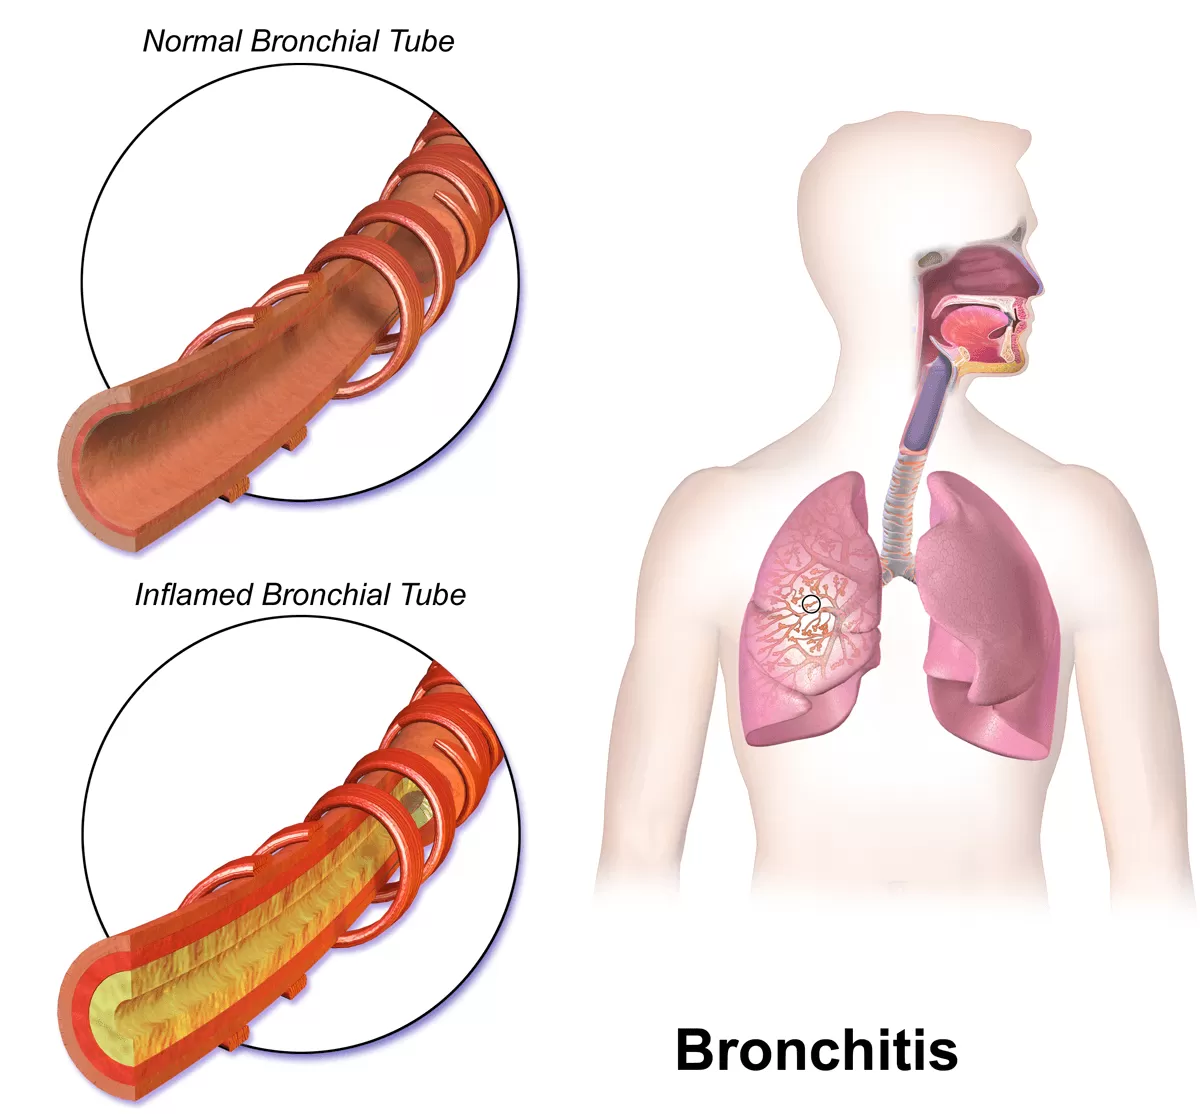 Bronchitiss